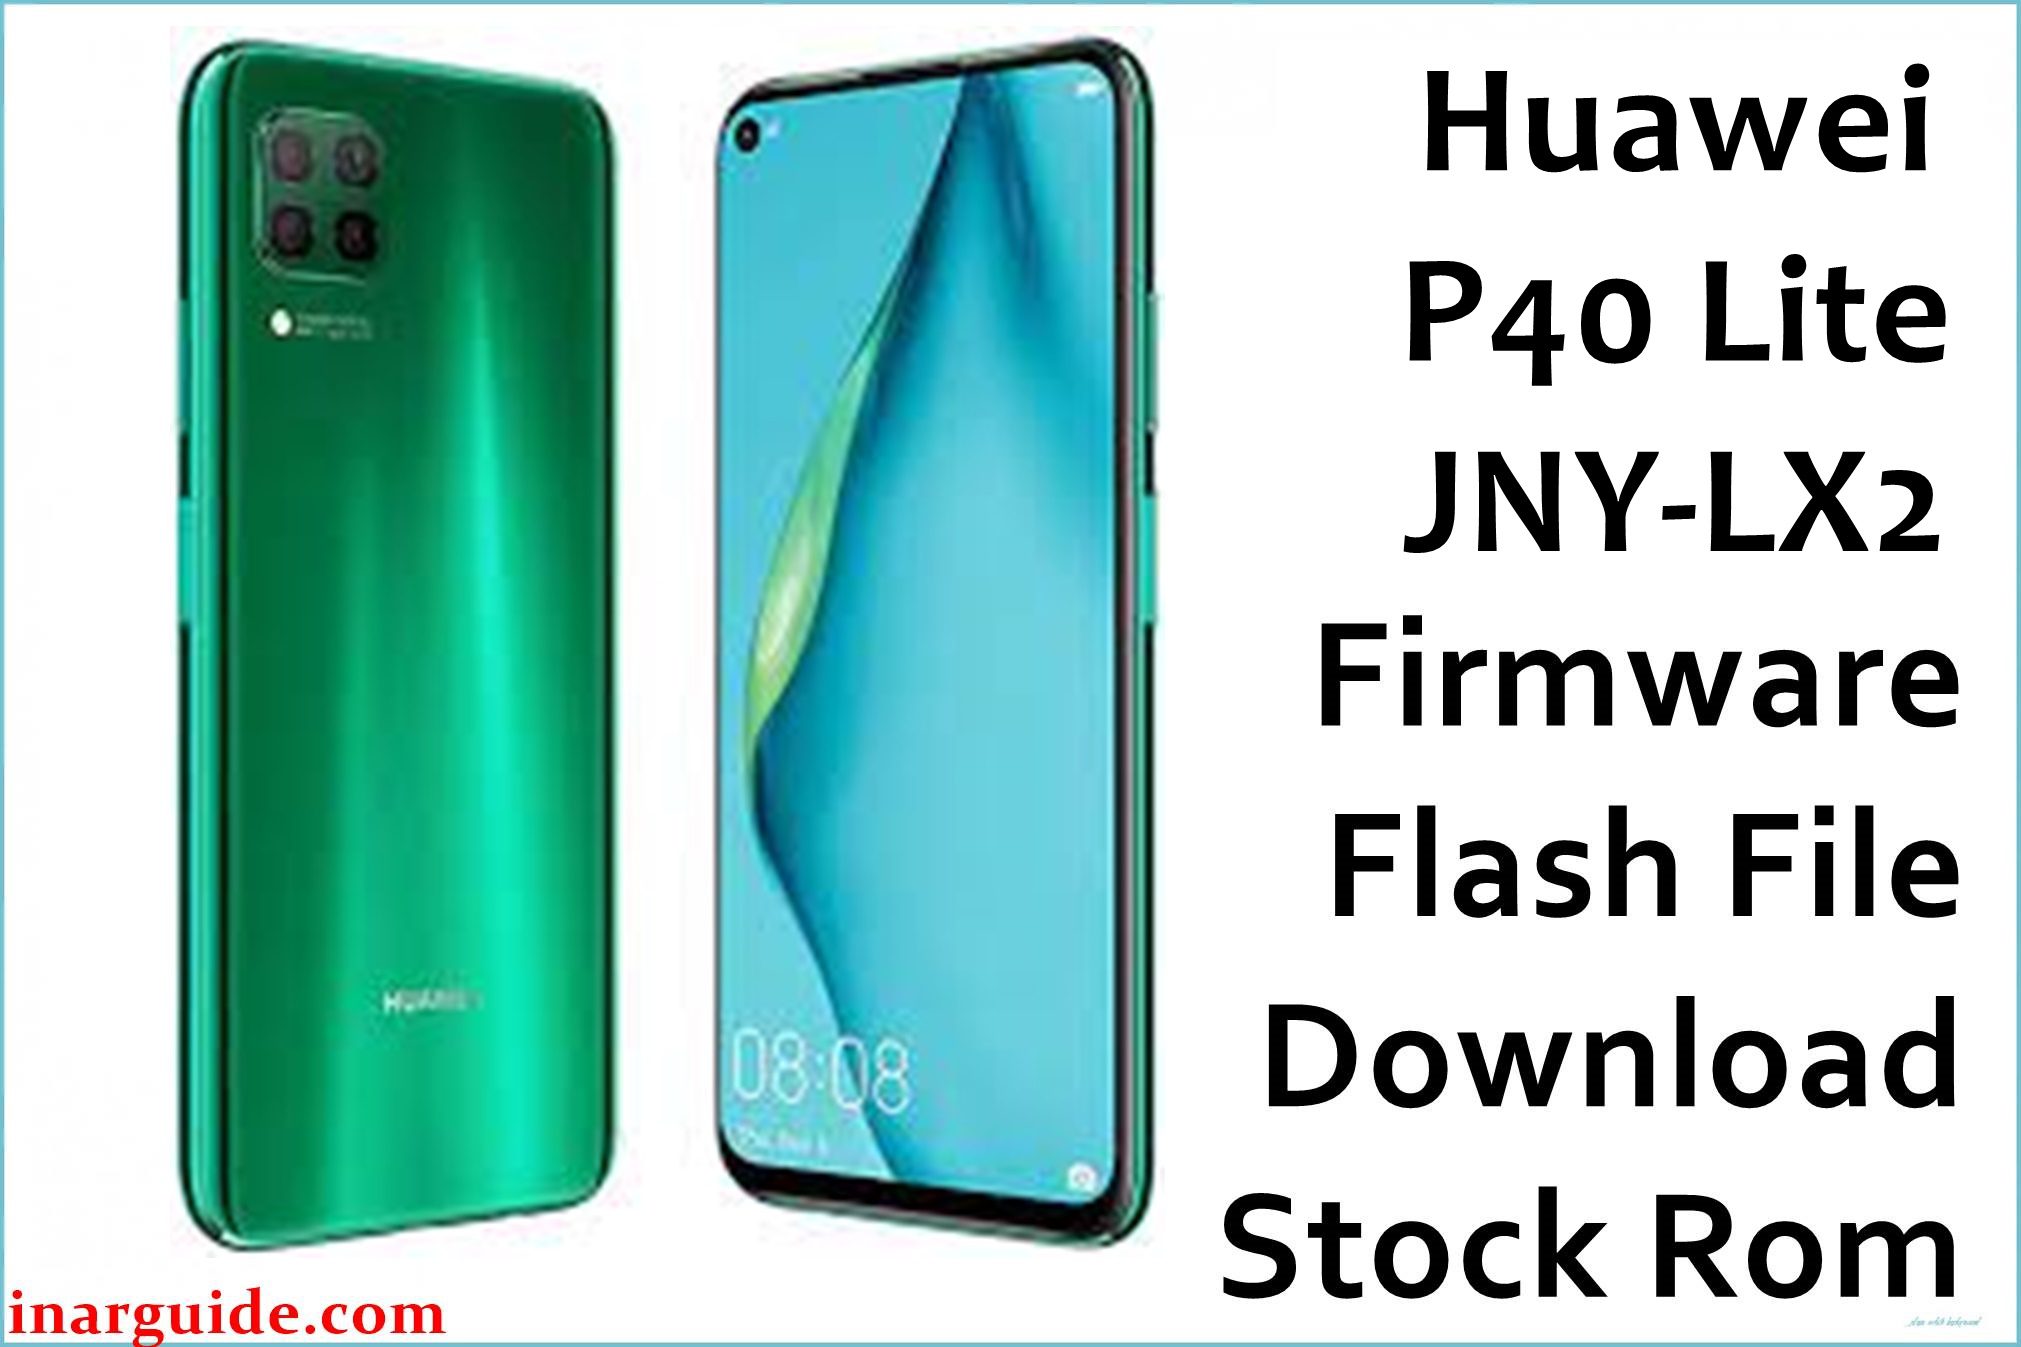 Huawei P40 Lite JNY LX2